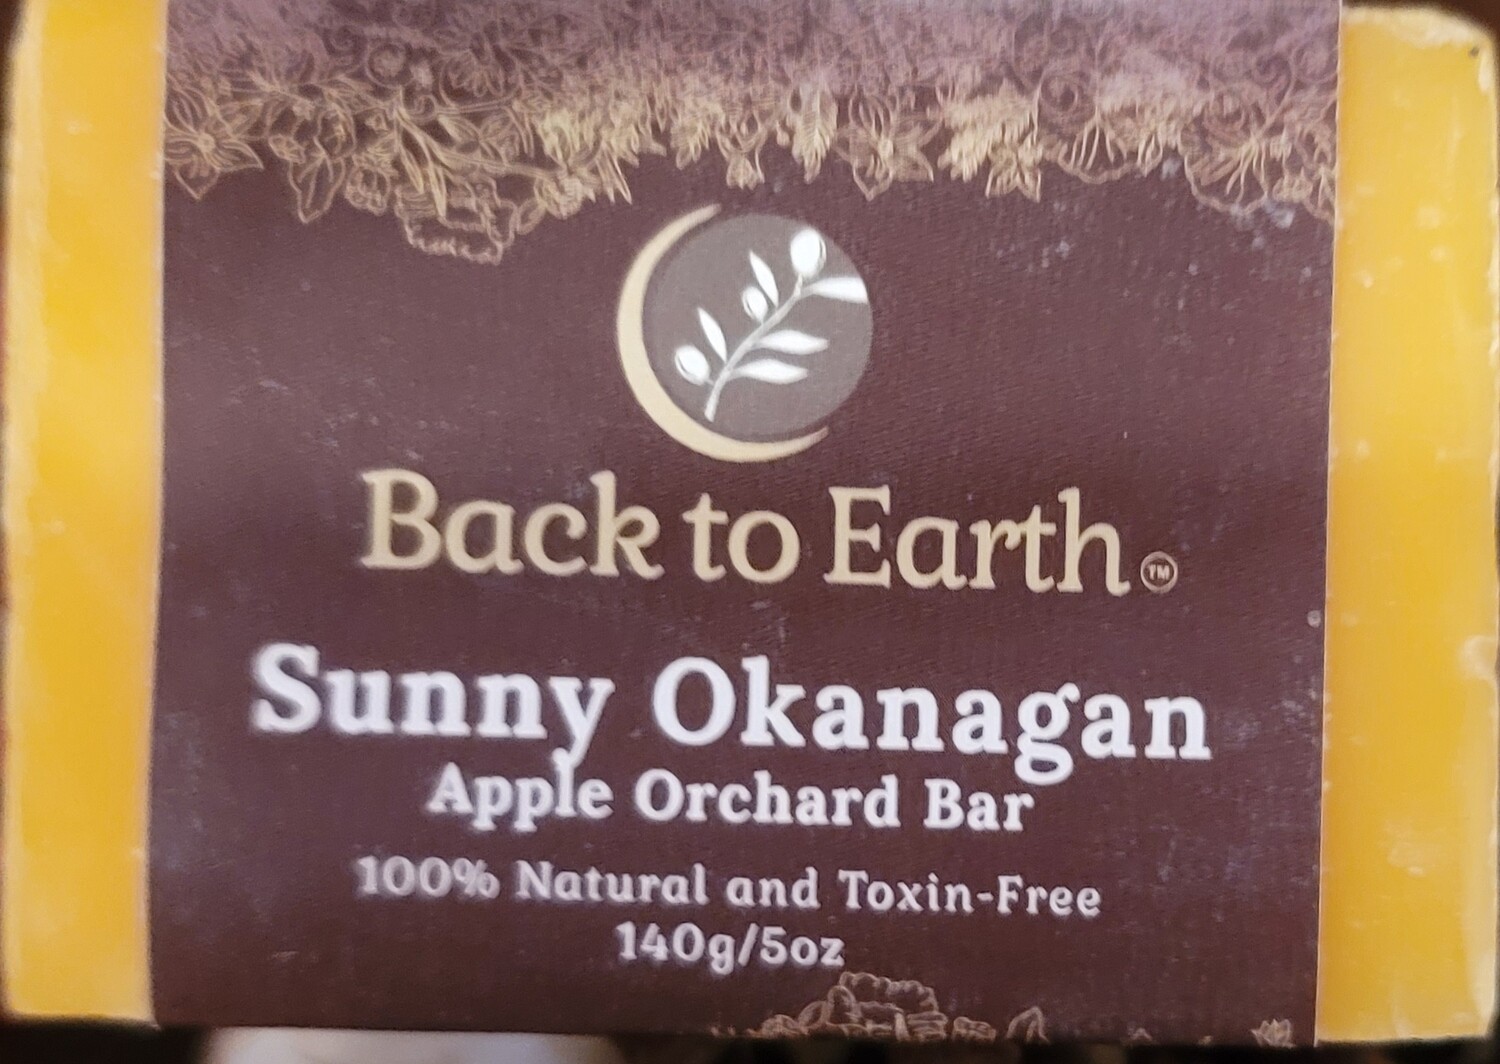 Sunny Okanagan Apple Orchard Bar - 140g/5oz